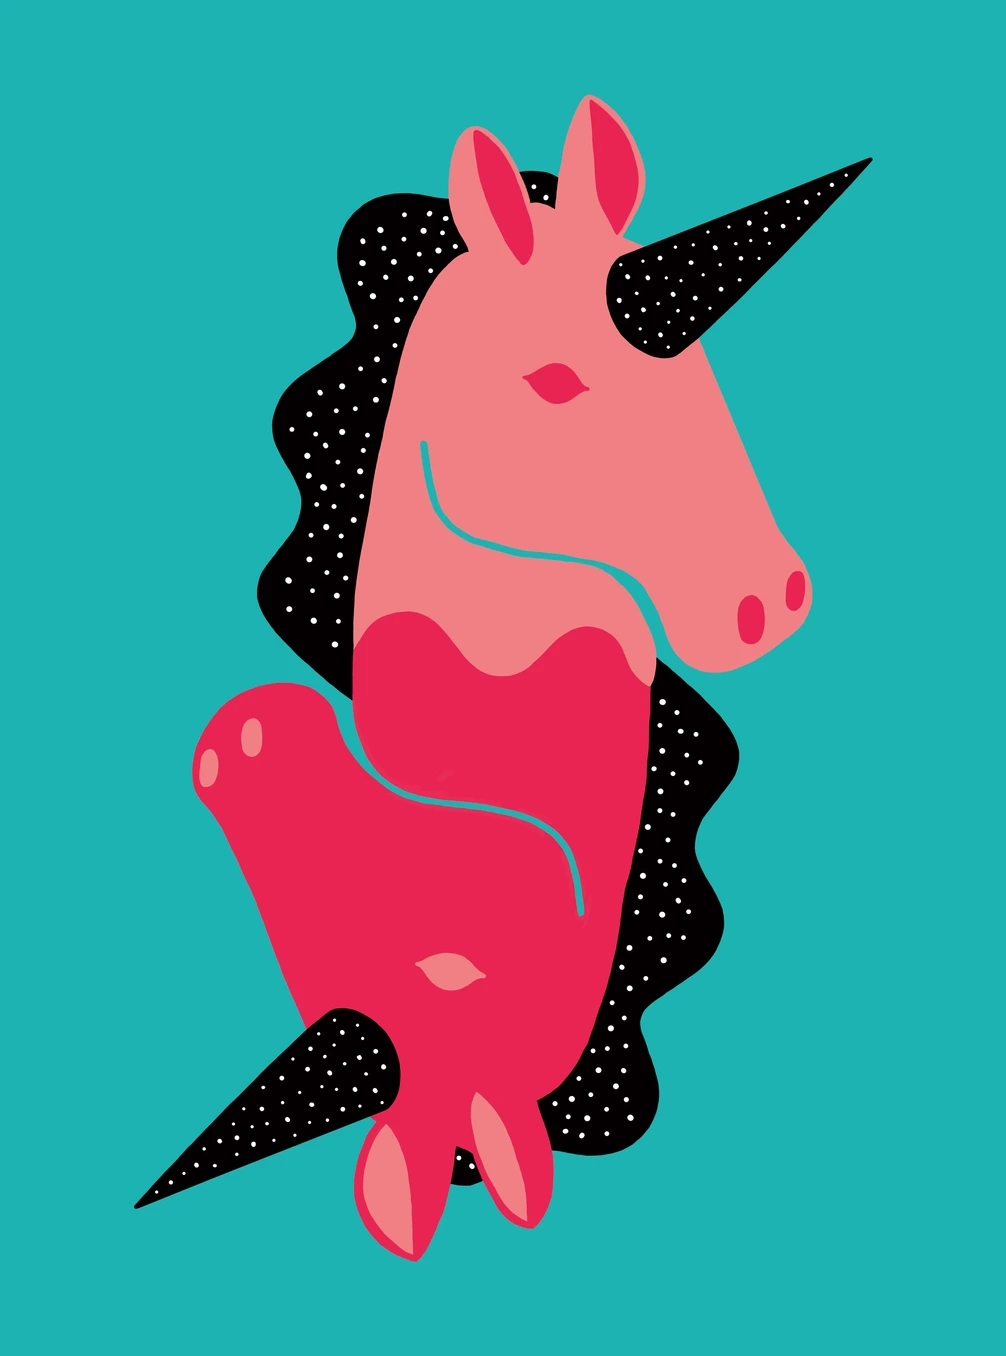 Illustration of a unicorn